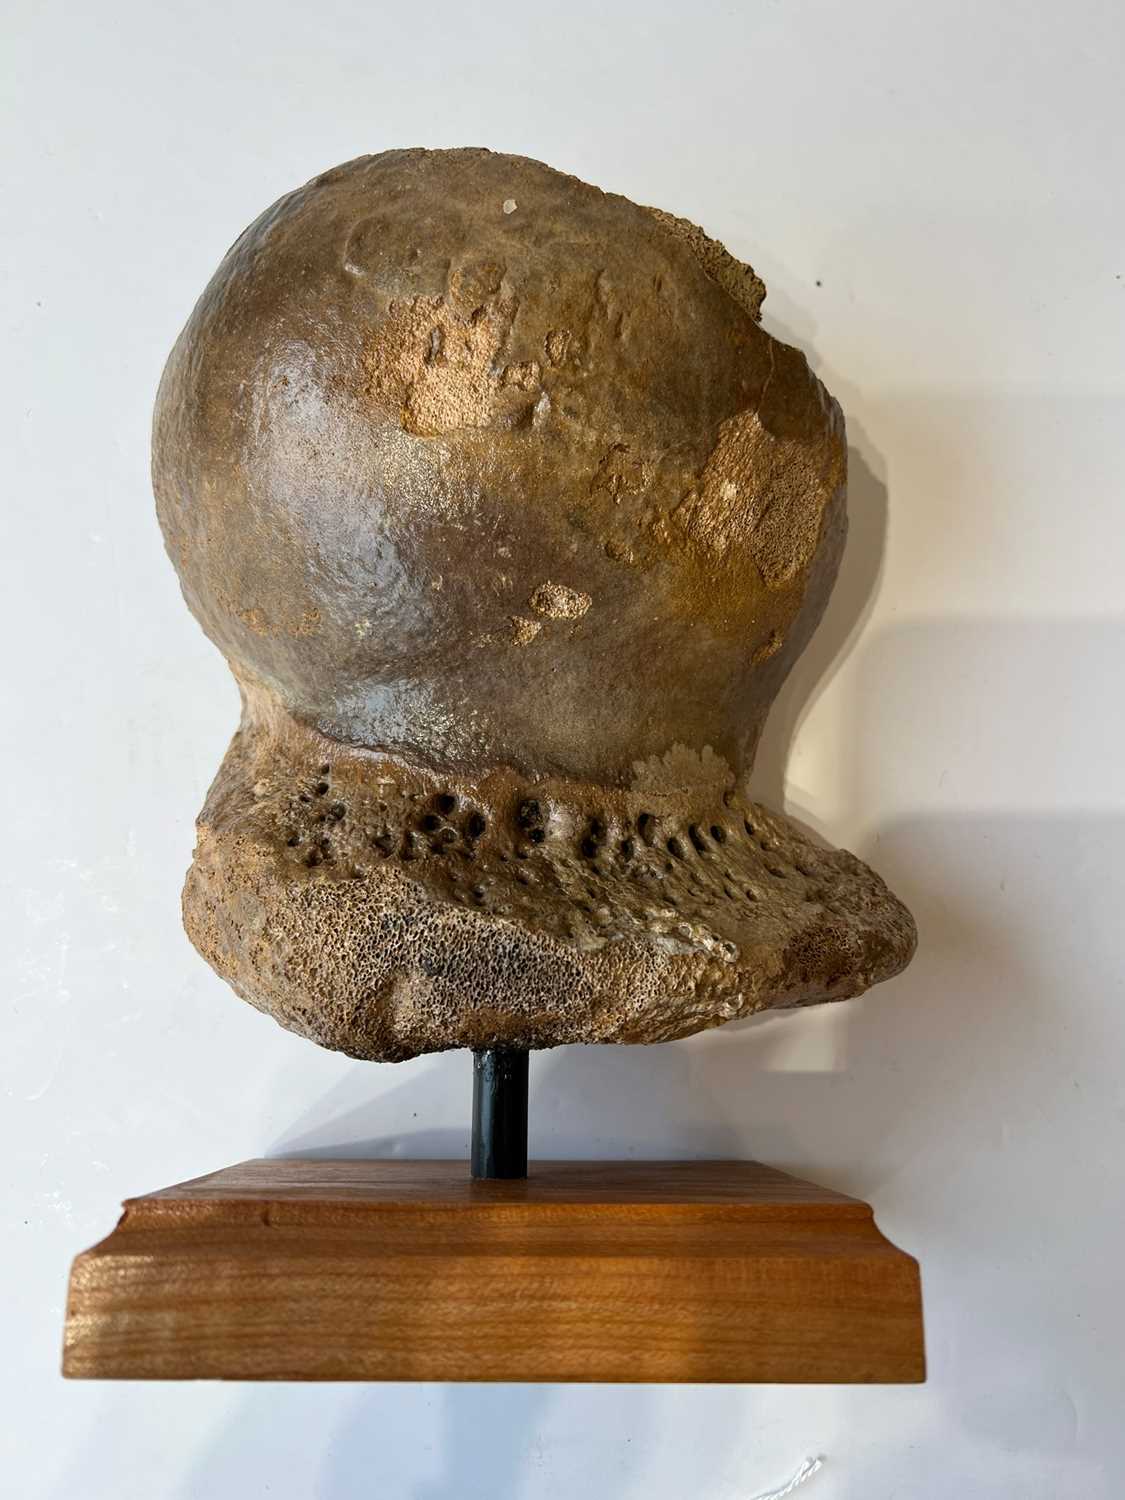 AN EXTINCT WOOLLY MAMMOTH HUMERUS HEAD BONE, 100,000 YEARS OLD - Image 2 of 3